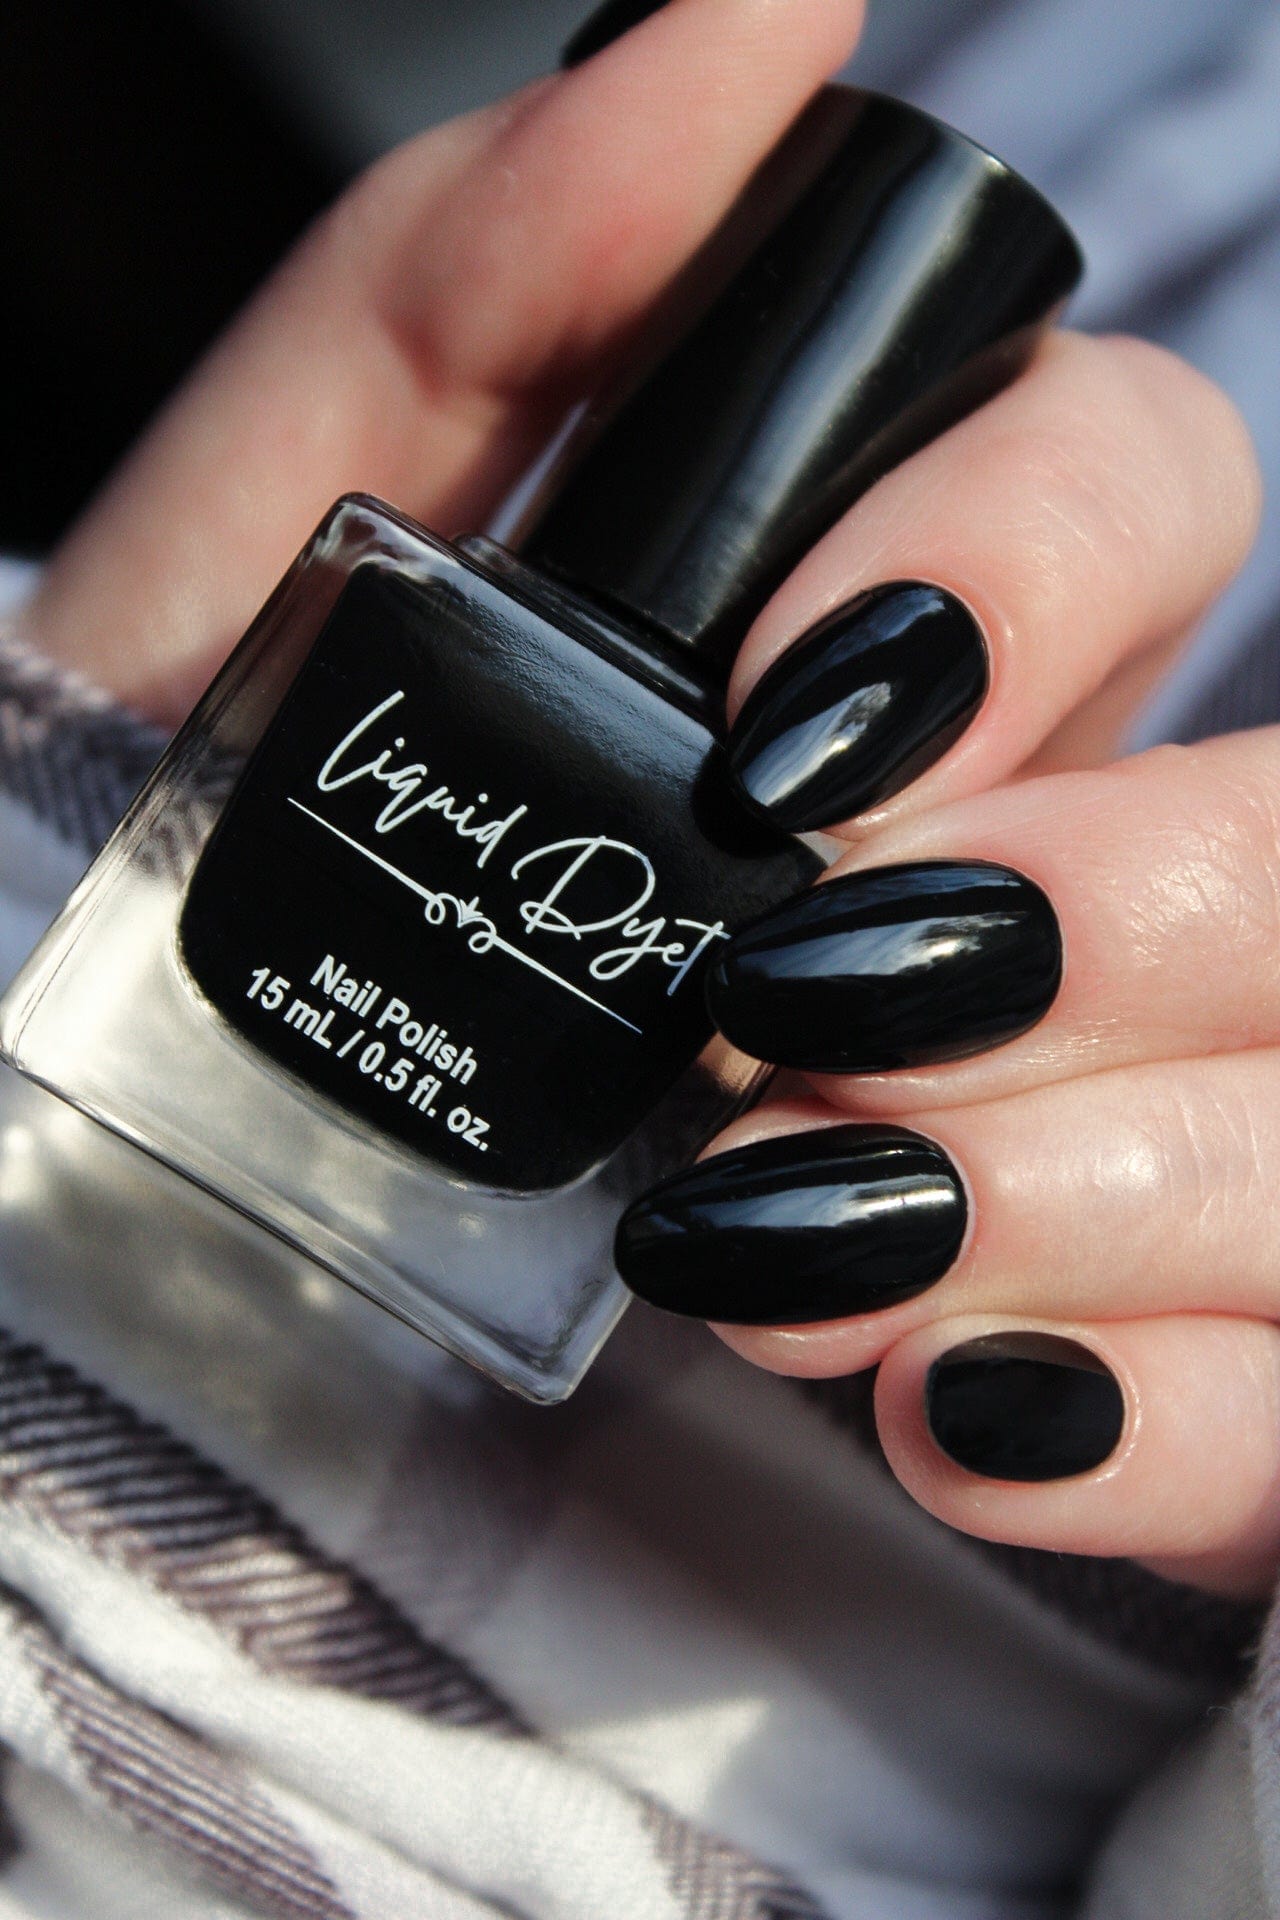 Picture of fingernails painted in a sleek black vegan nail polish